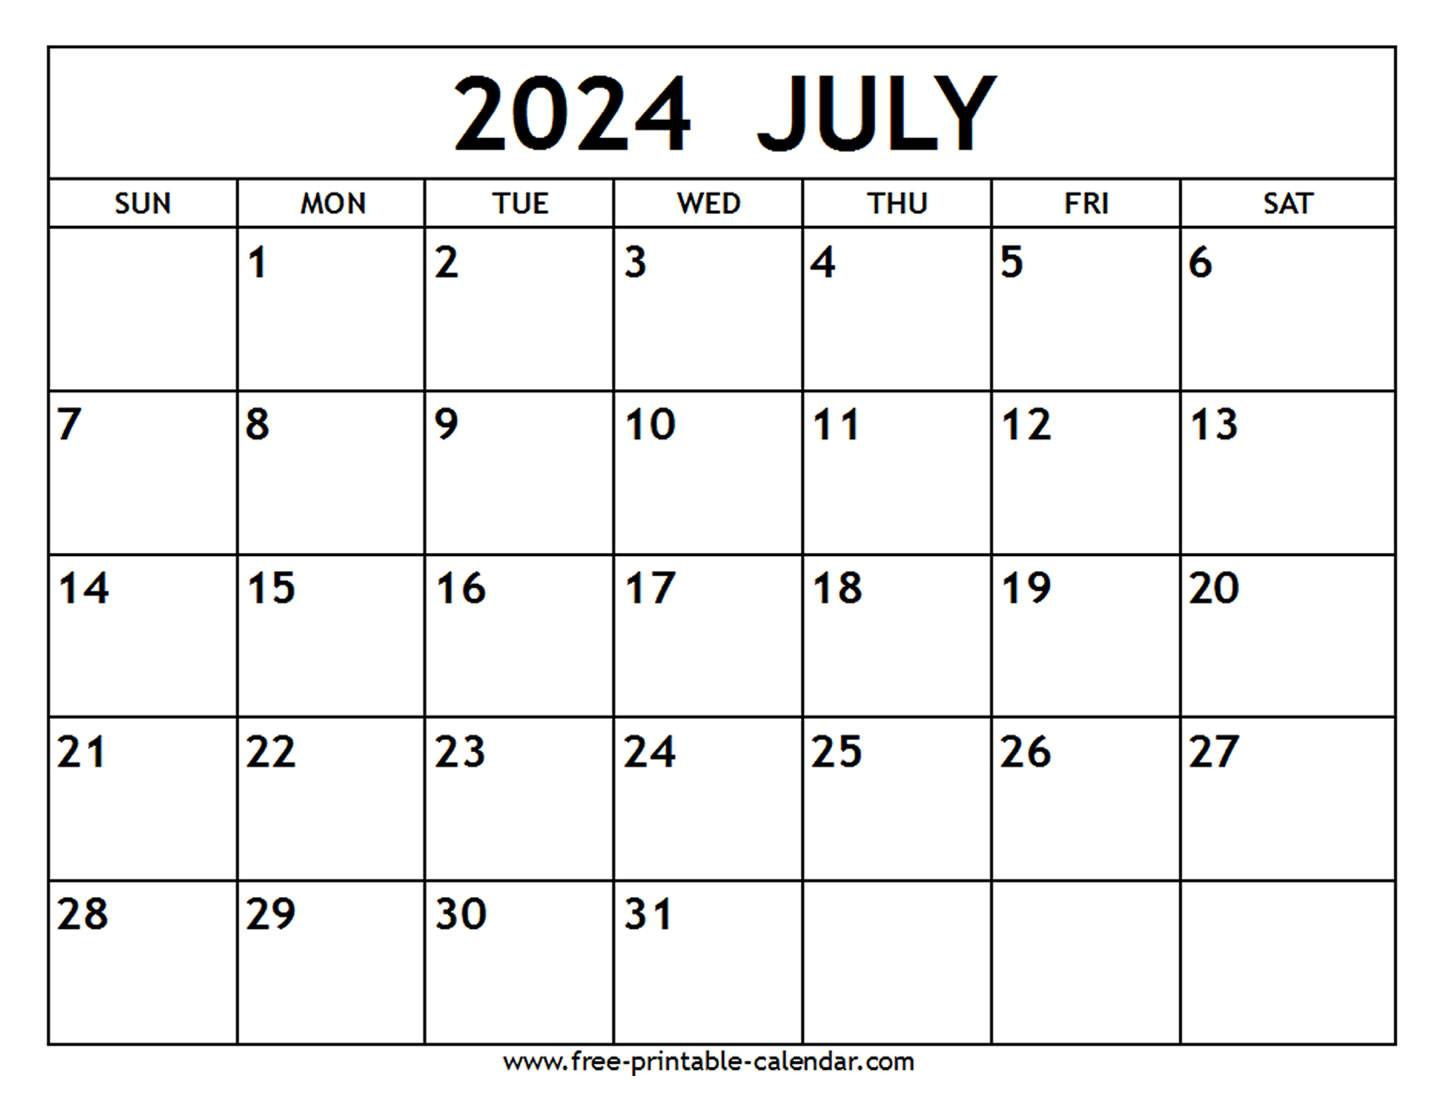 July 2024 Calendar - Free-Printable-Calendar intended for 18 July 2024 Calendar Printable